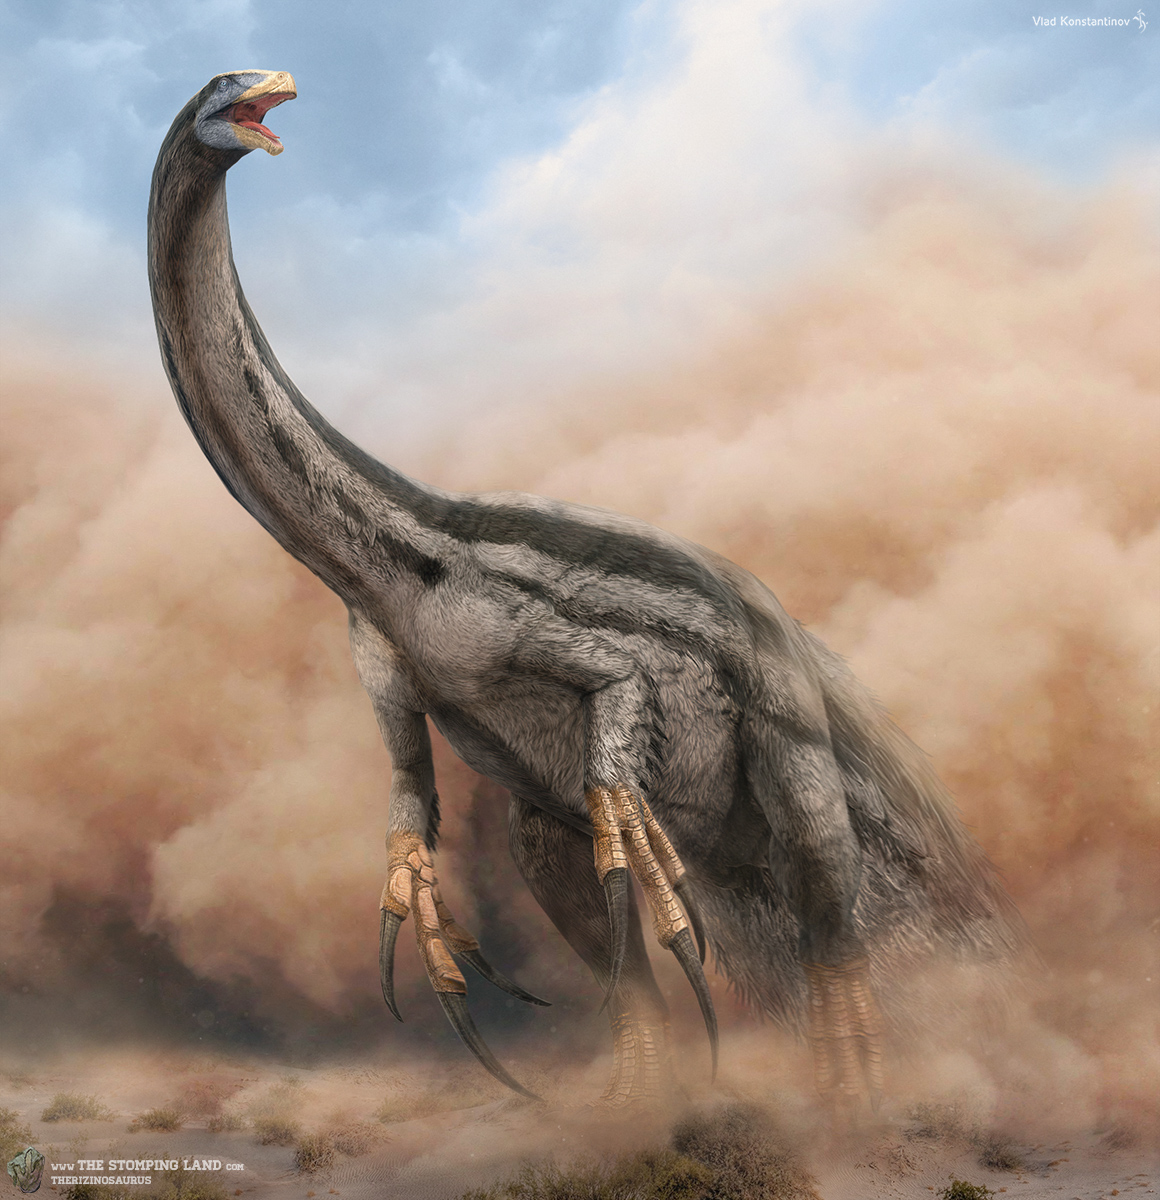 General Jurassic World: Fallen Kingdom News Thread V.2 - Page 12 Latest?cb=20151130183219